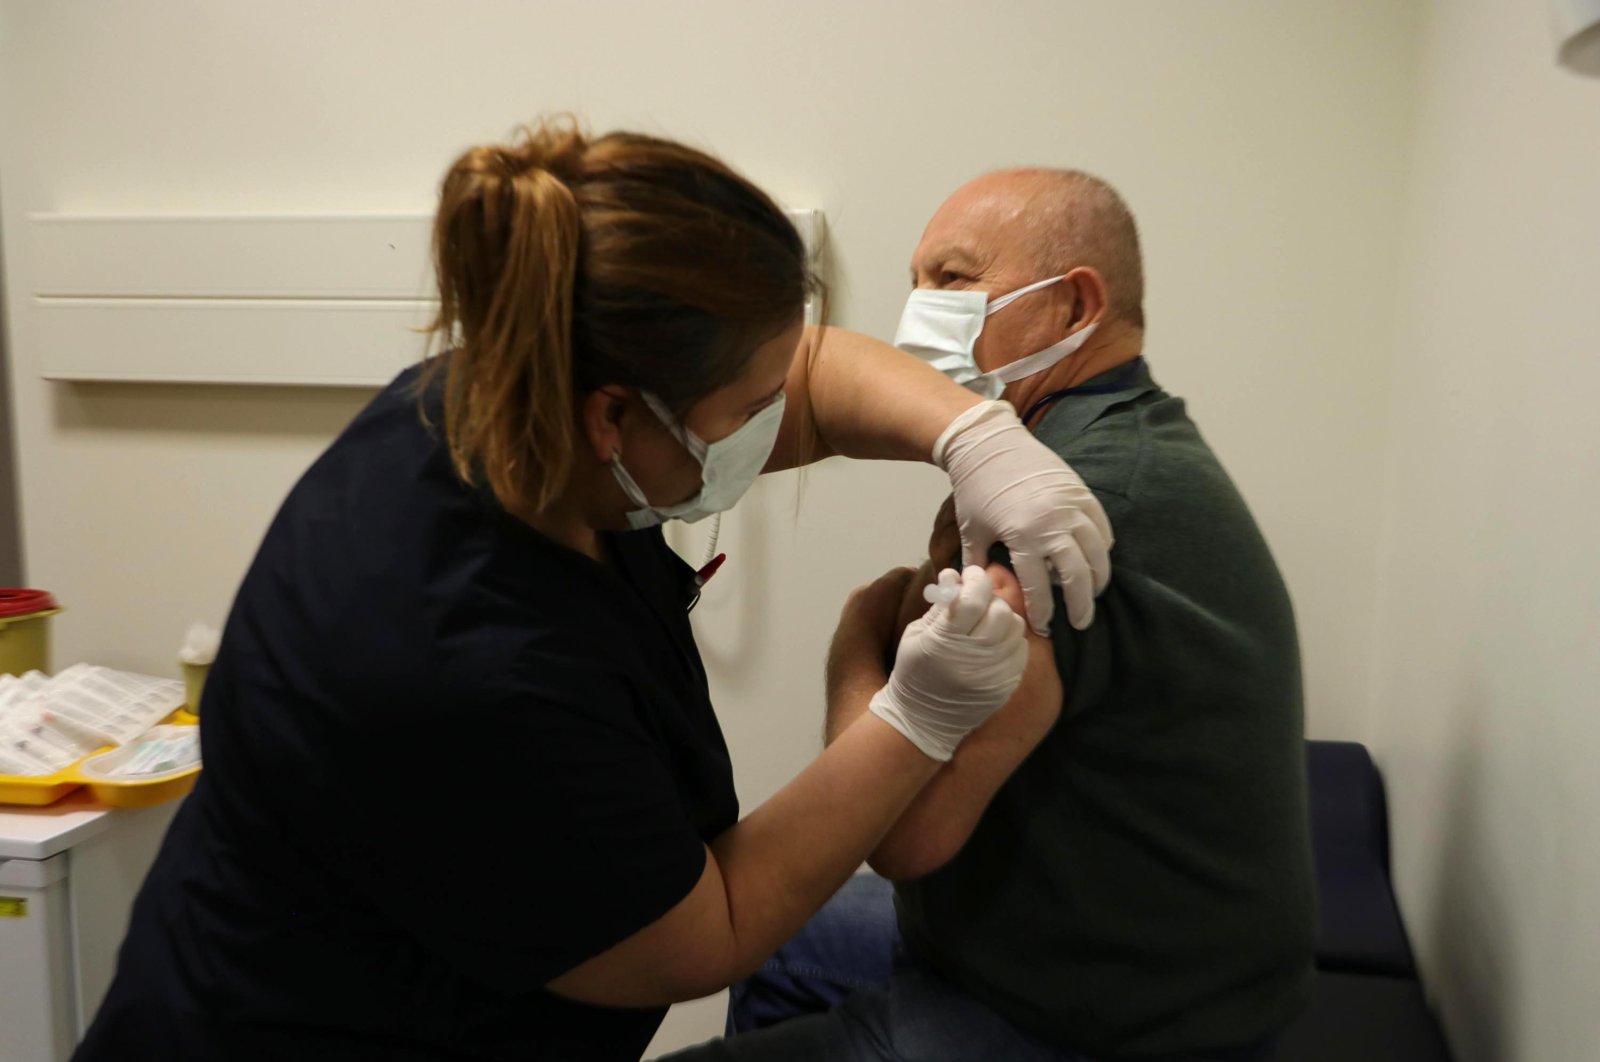 A man is vaccinated at a hospital in Eskişehir, Turkey, April 25, 2021. (DHA PHOTO)